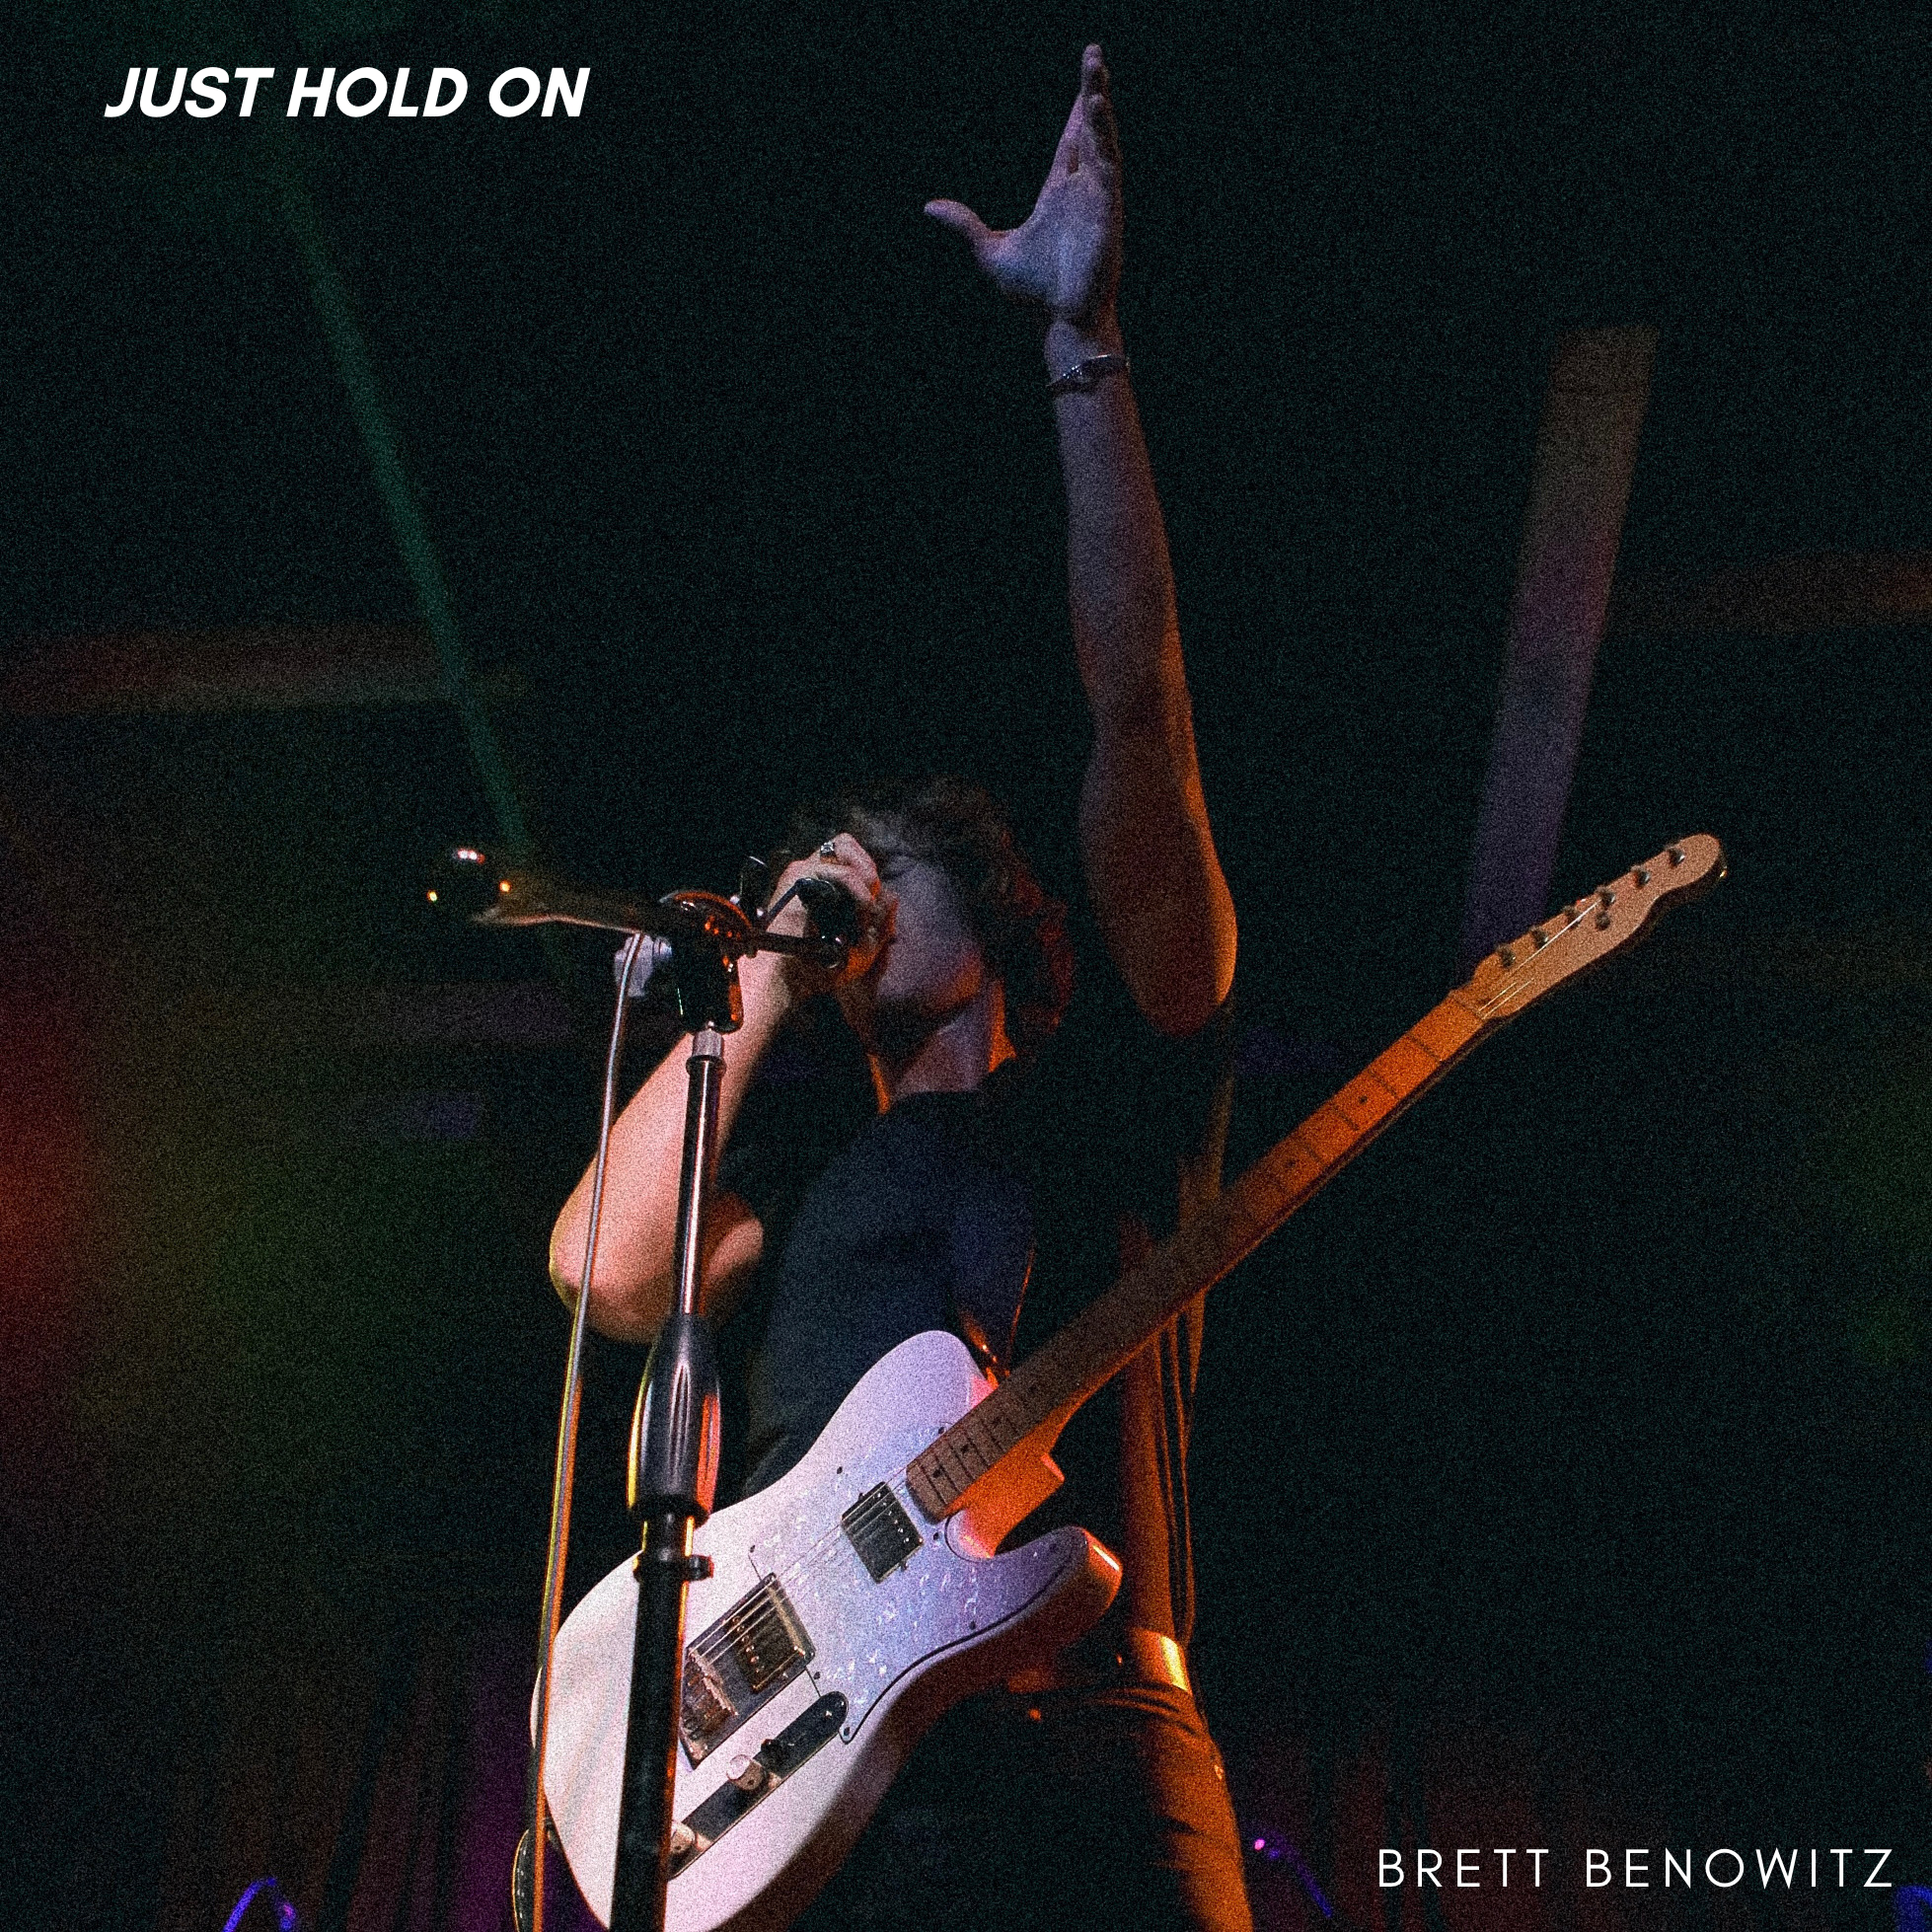 Brett Benowitz "Just Hold On" single artwork